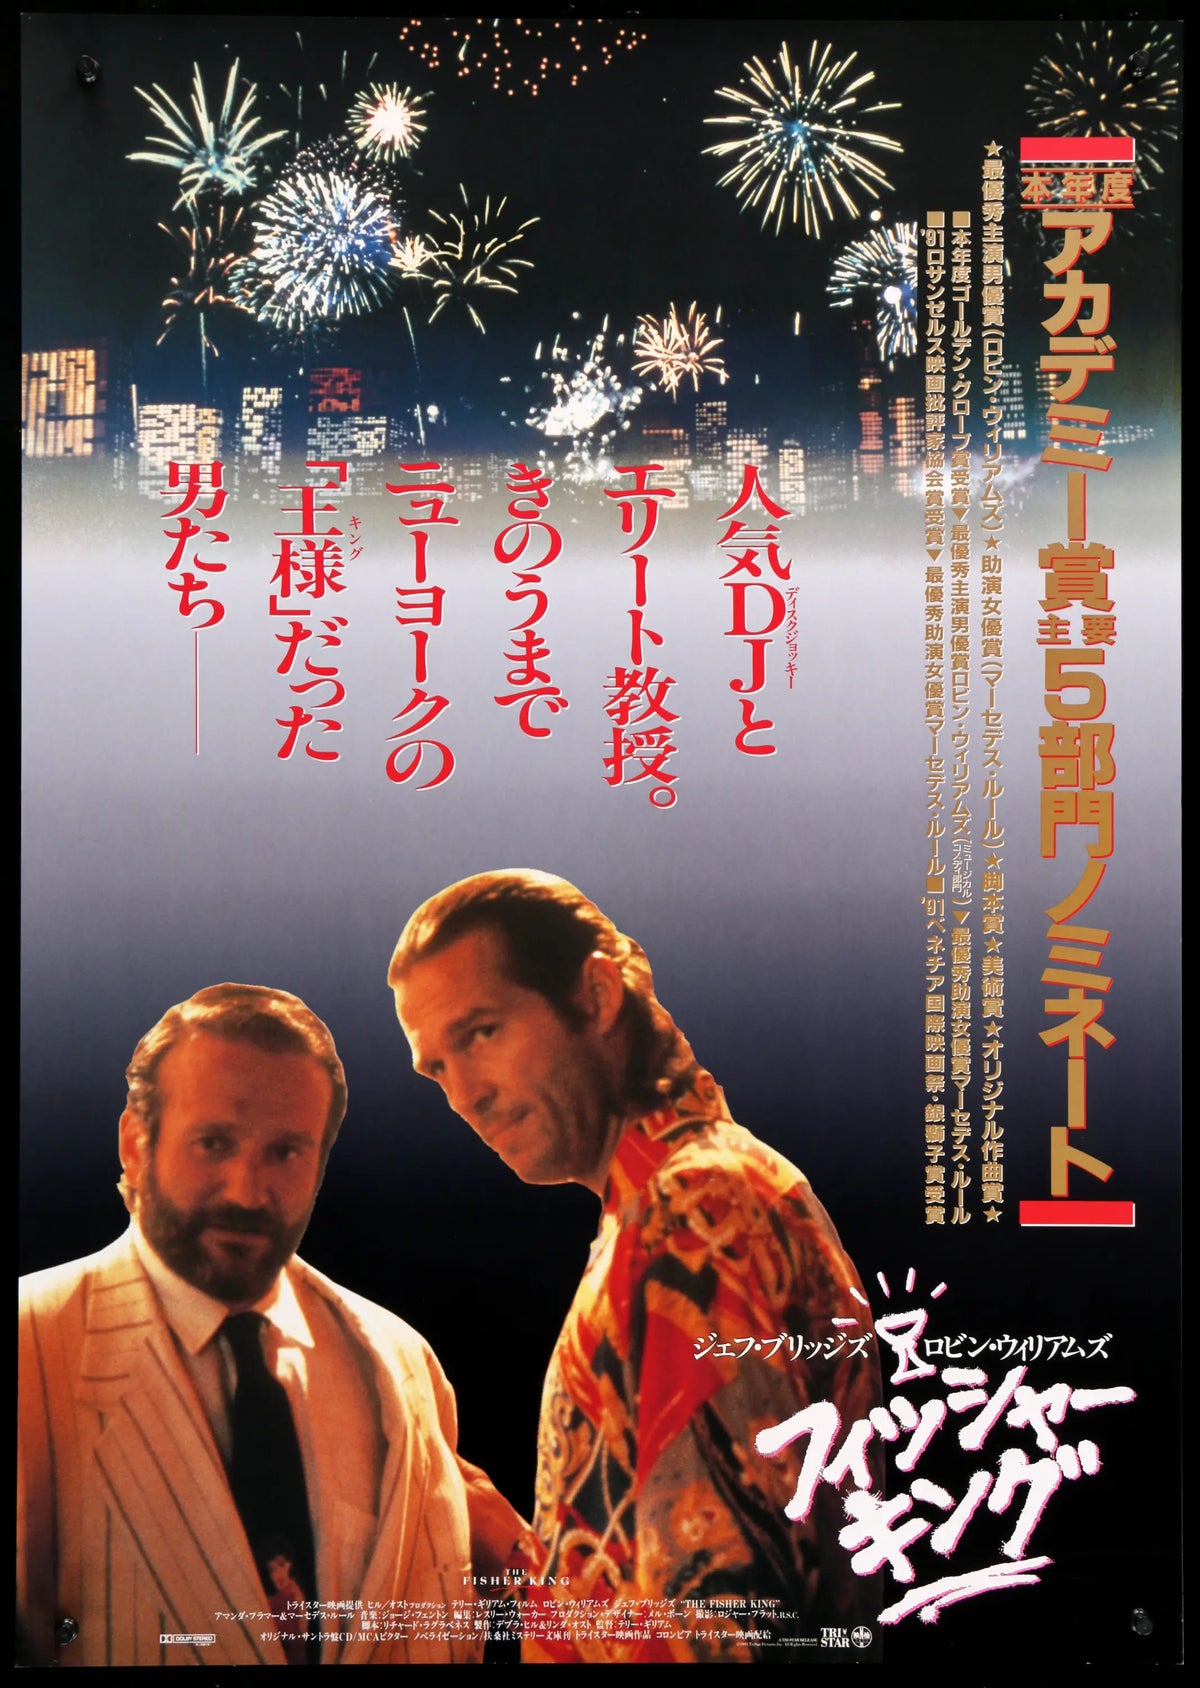 Fisher King (1991) original movie poster for sale at Original Film Art